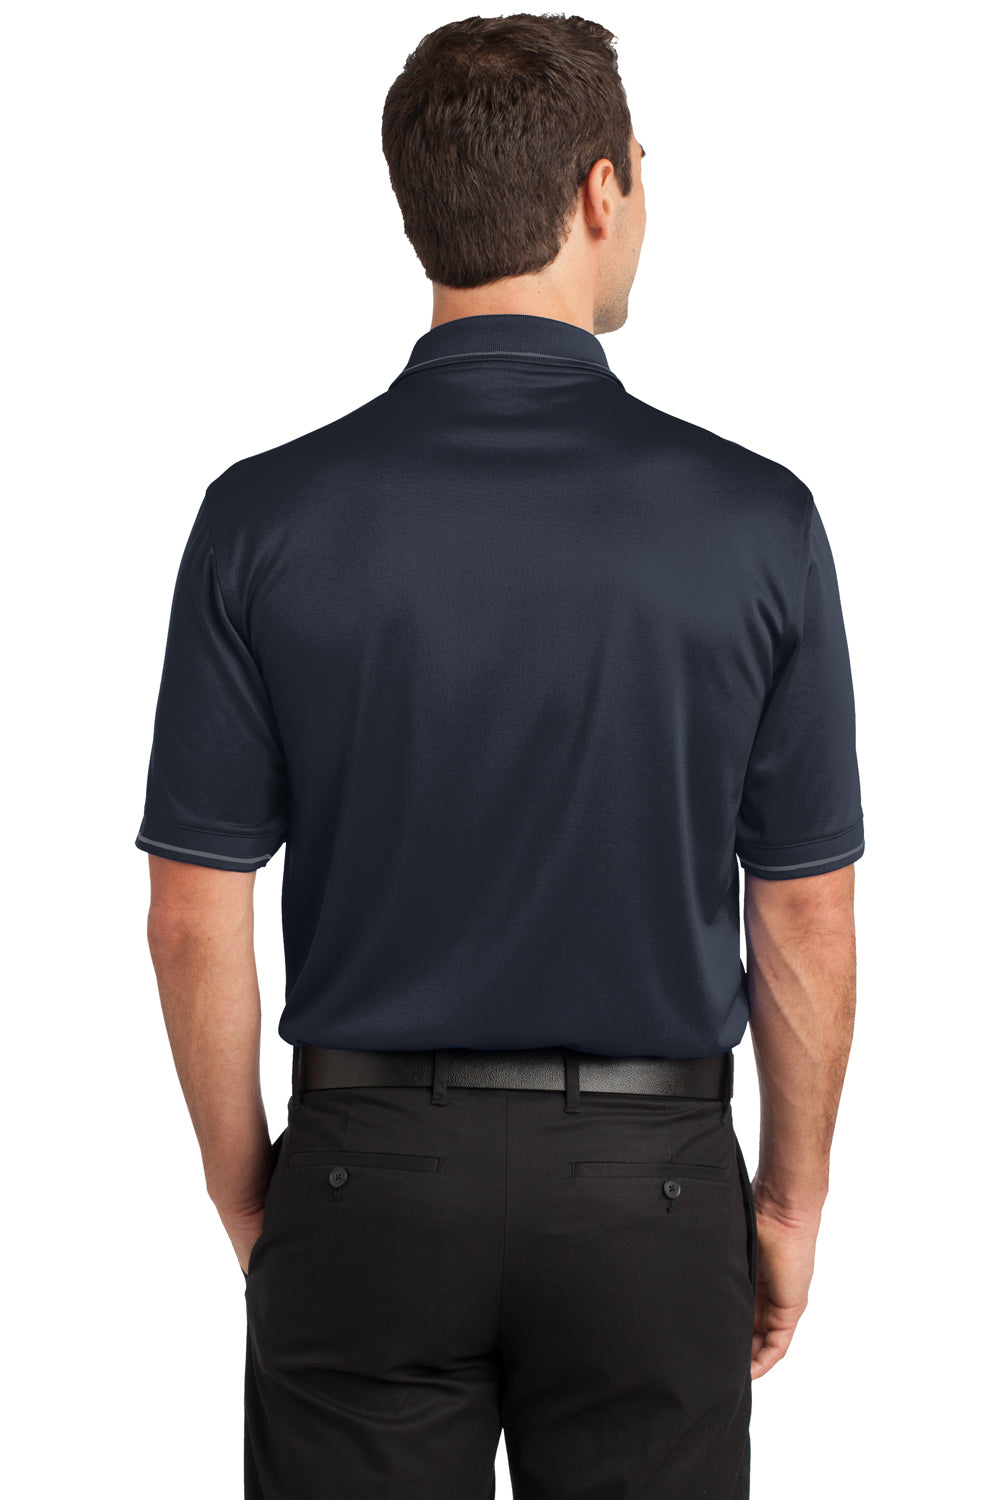 CornerStone CS415 Mens Select Moisture Wicking Short Sleeve Polo Shirt w/ Pocket Navy Blue Back